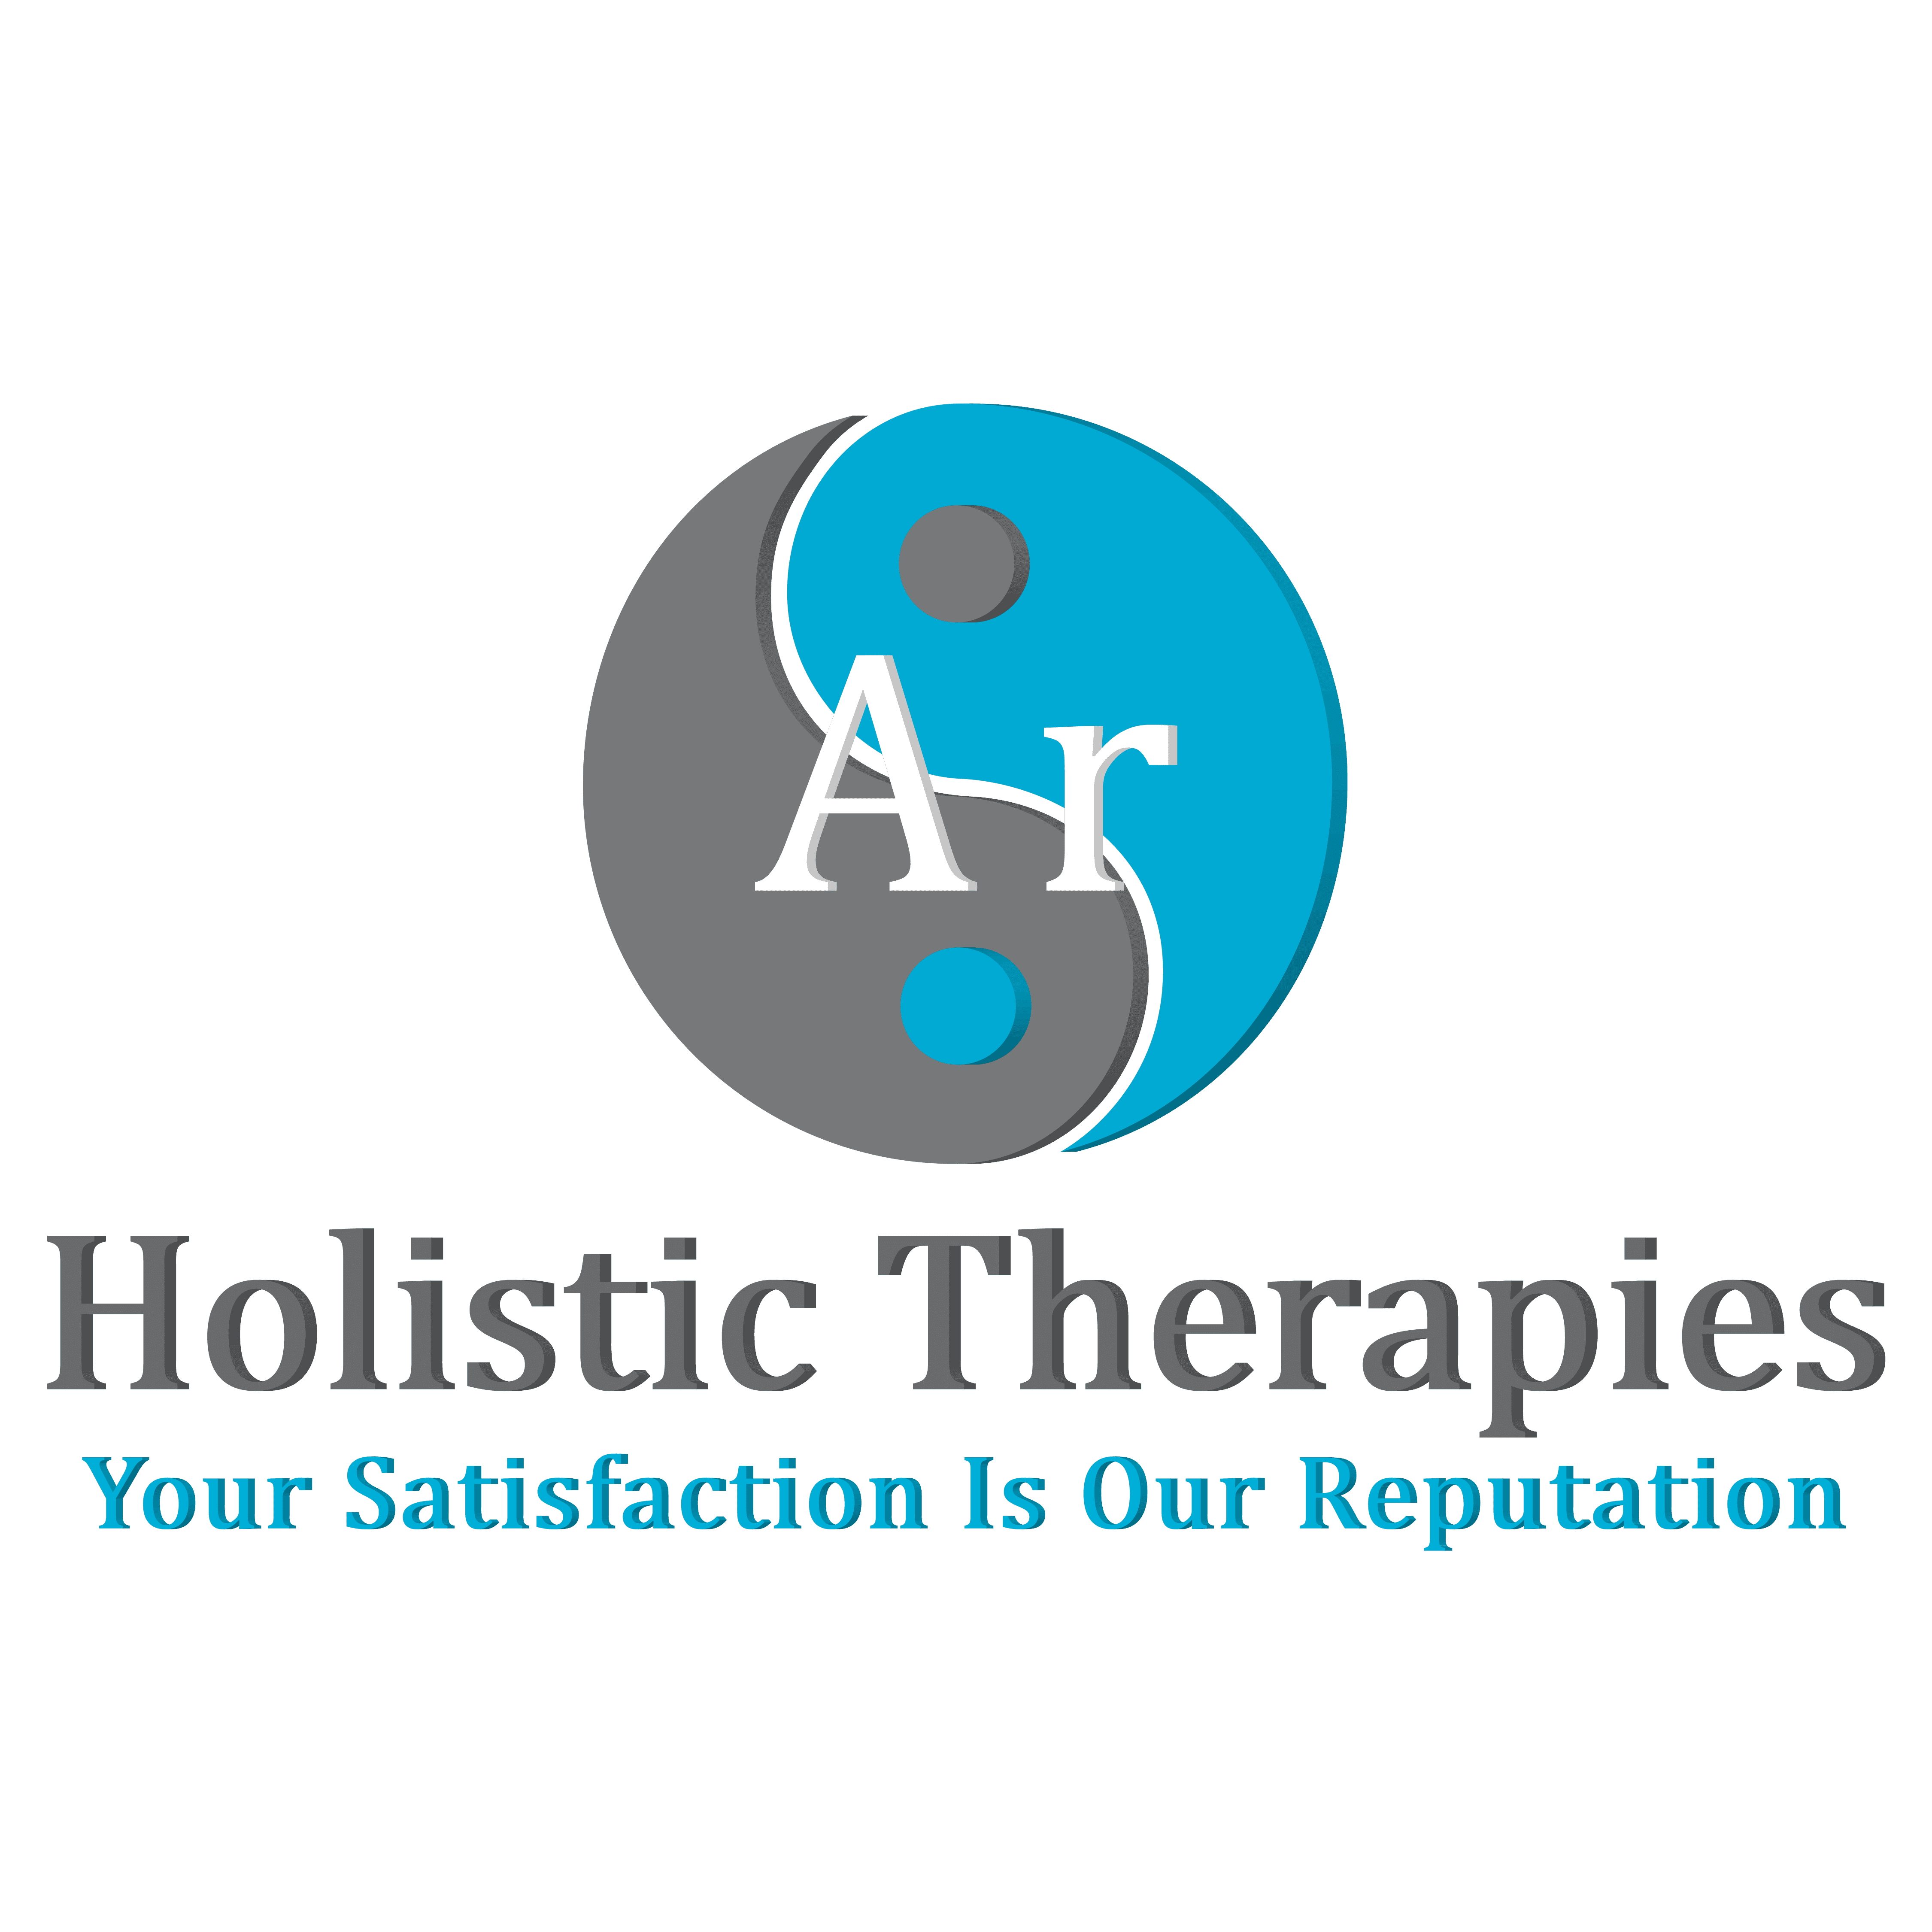 AR Holistic Therapies logo & text-02